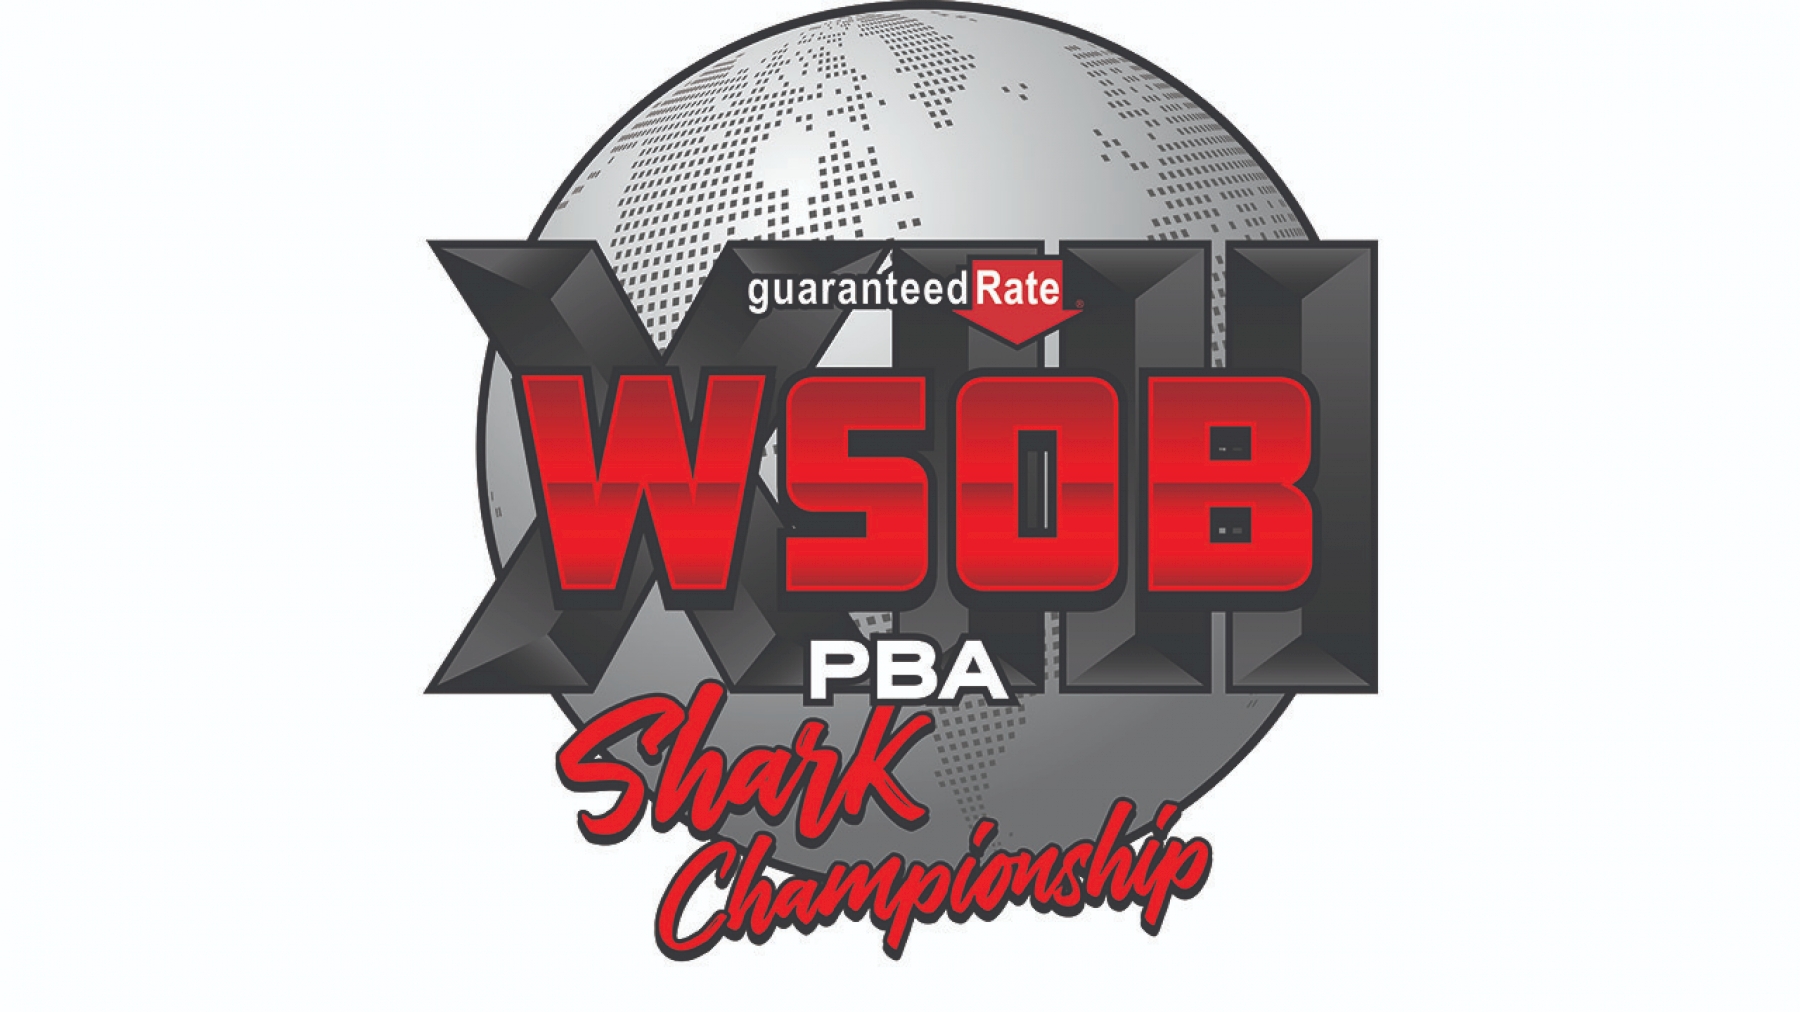 2022 PBA Shark Championship FloBowling Bowling